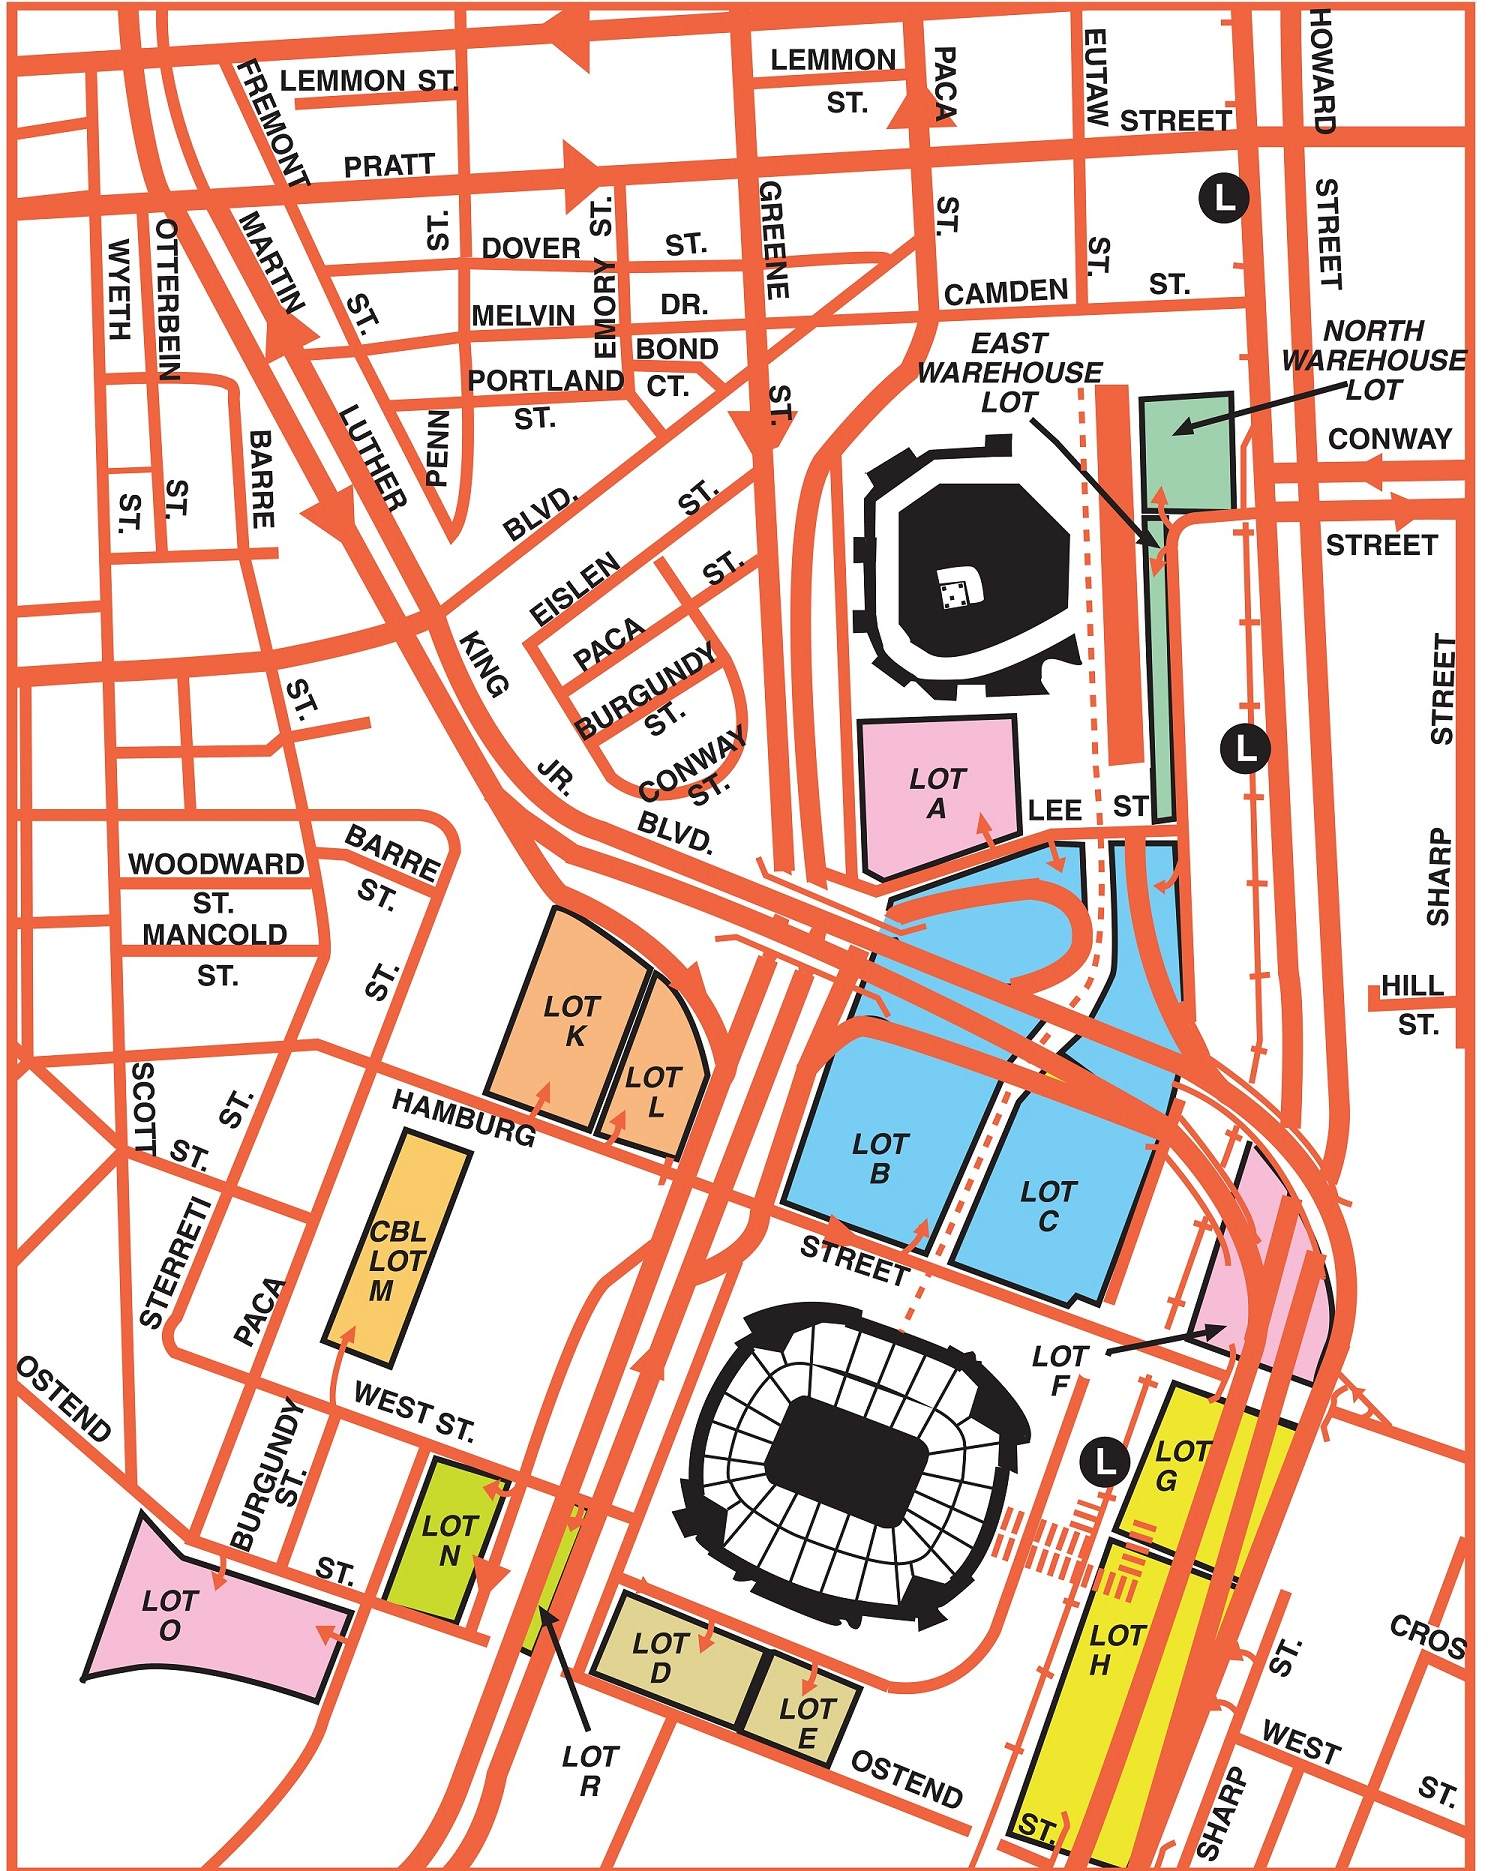 Oriole Park Camden Yards Parking Lot Map 